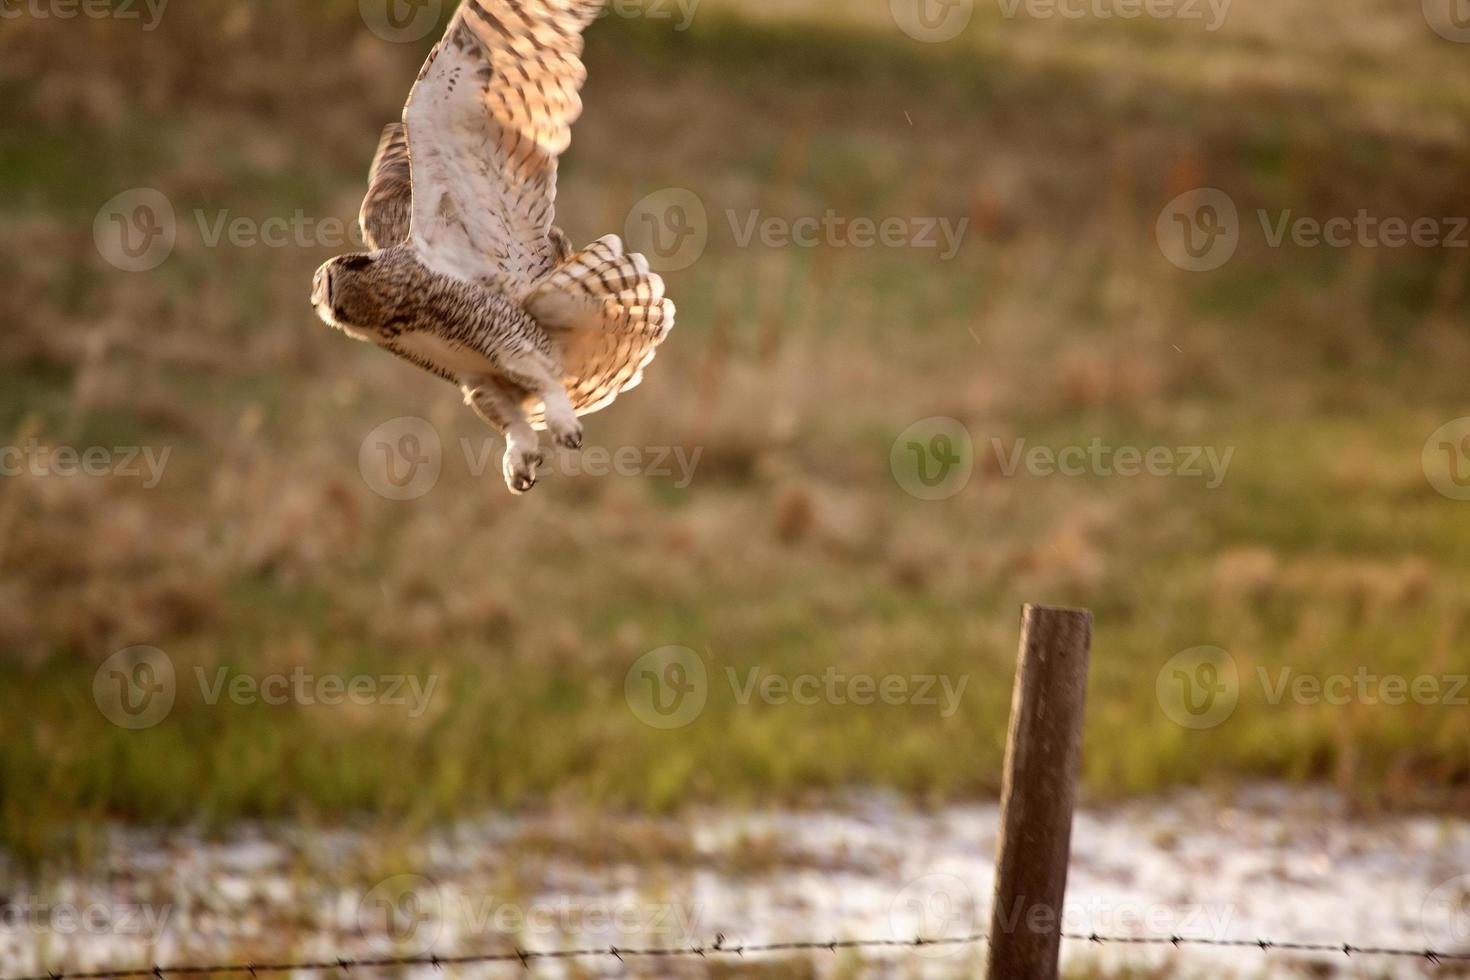 Great Horned Owl taking flight from fence post in Saskatchewan photo